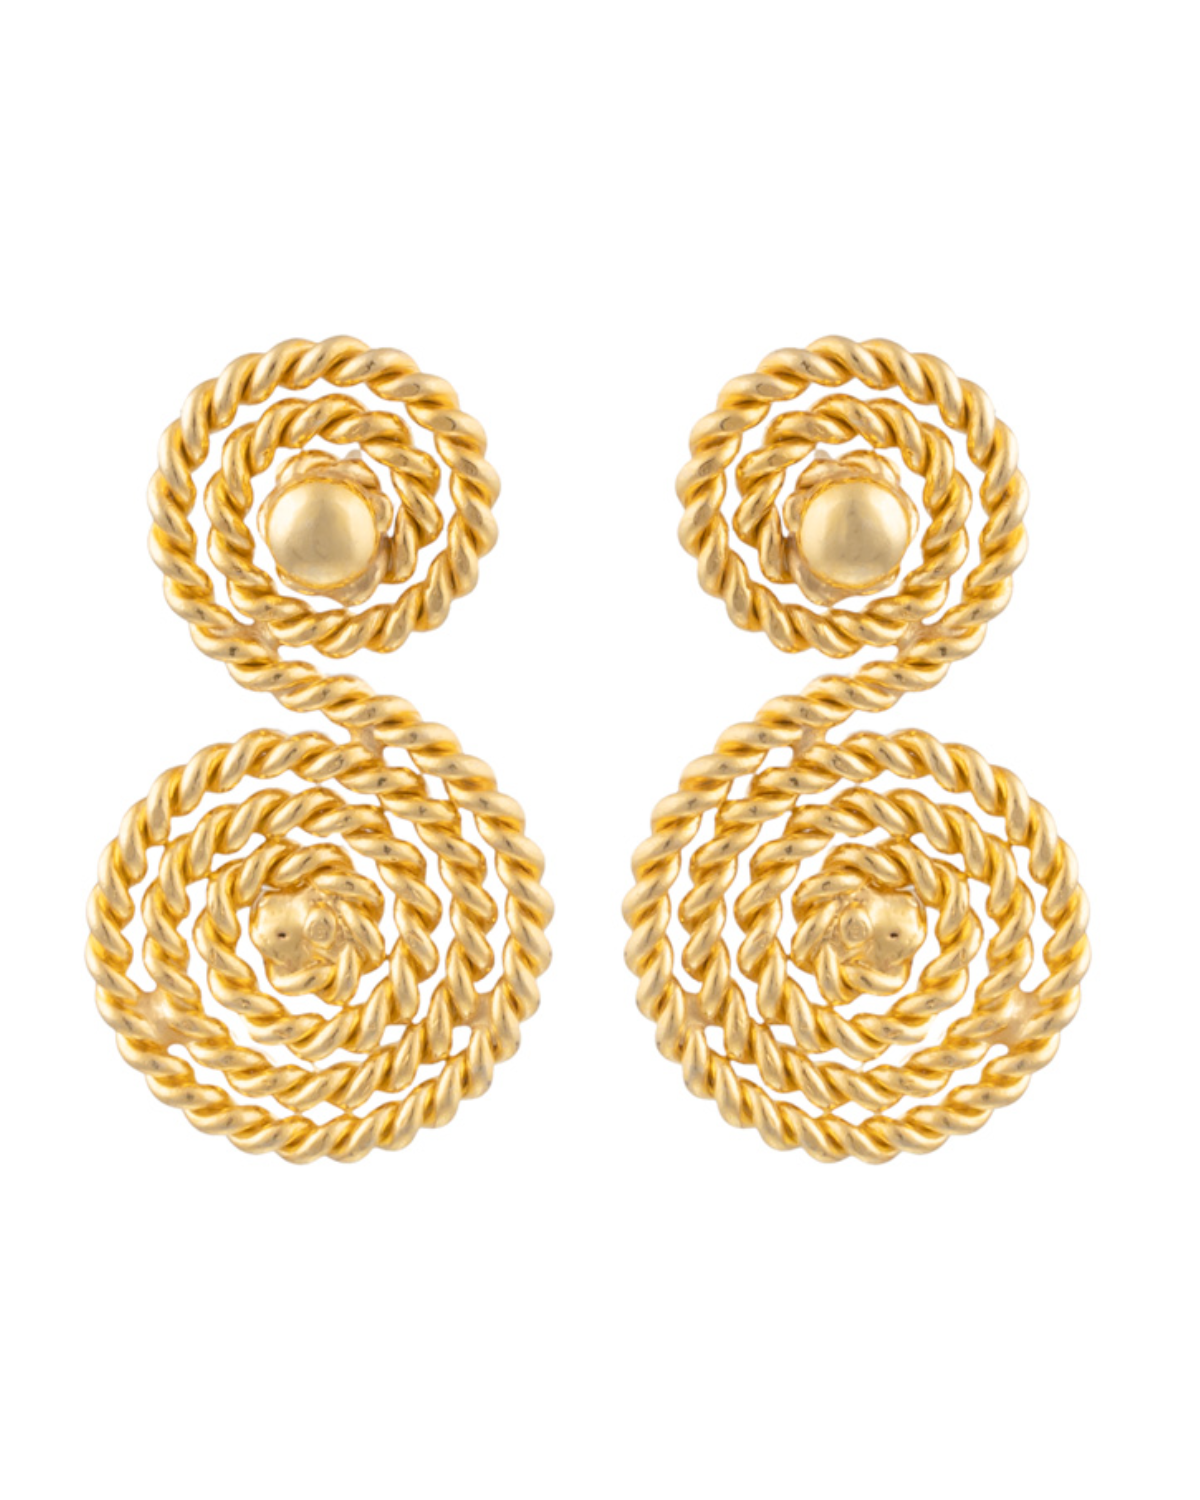 Spiral Earrings (Gold/Stone)